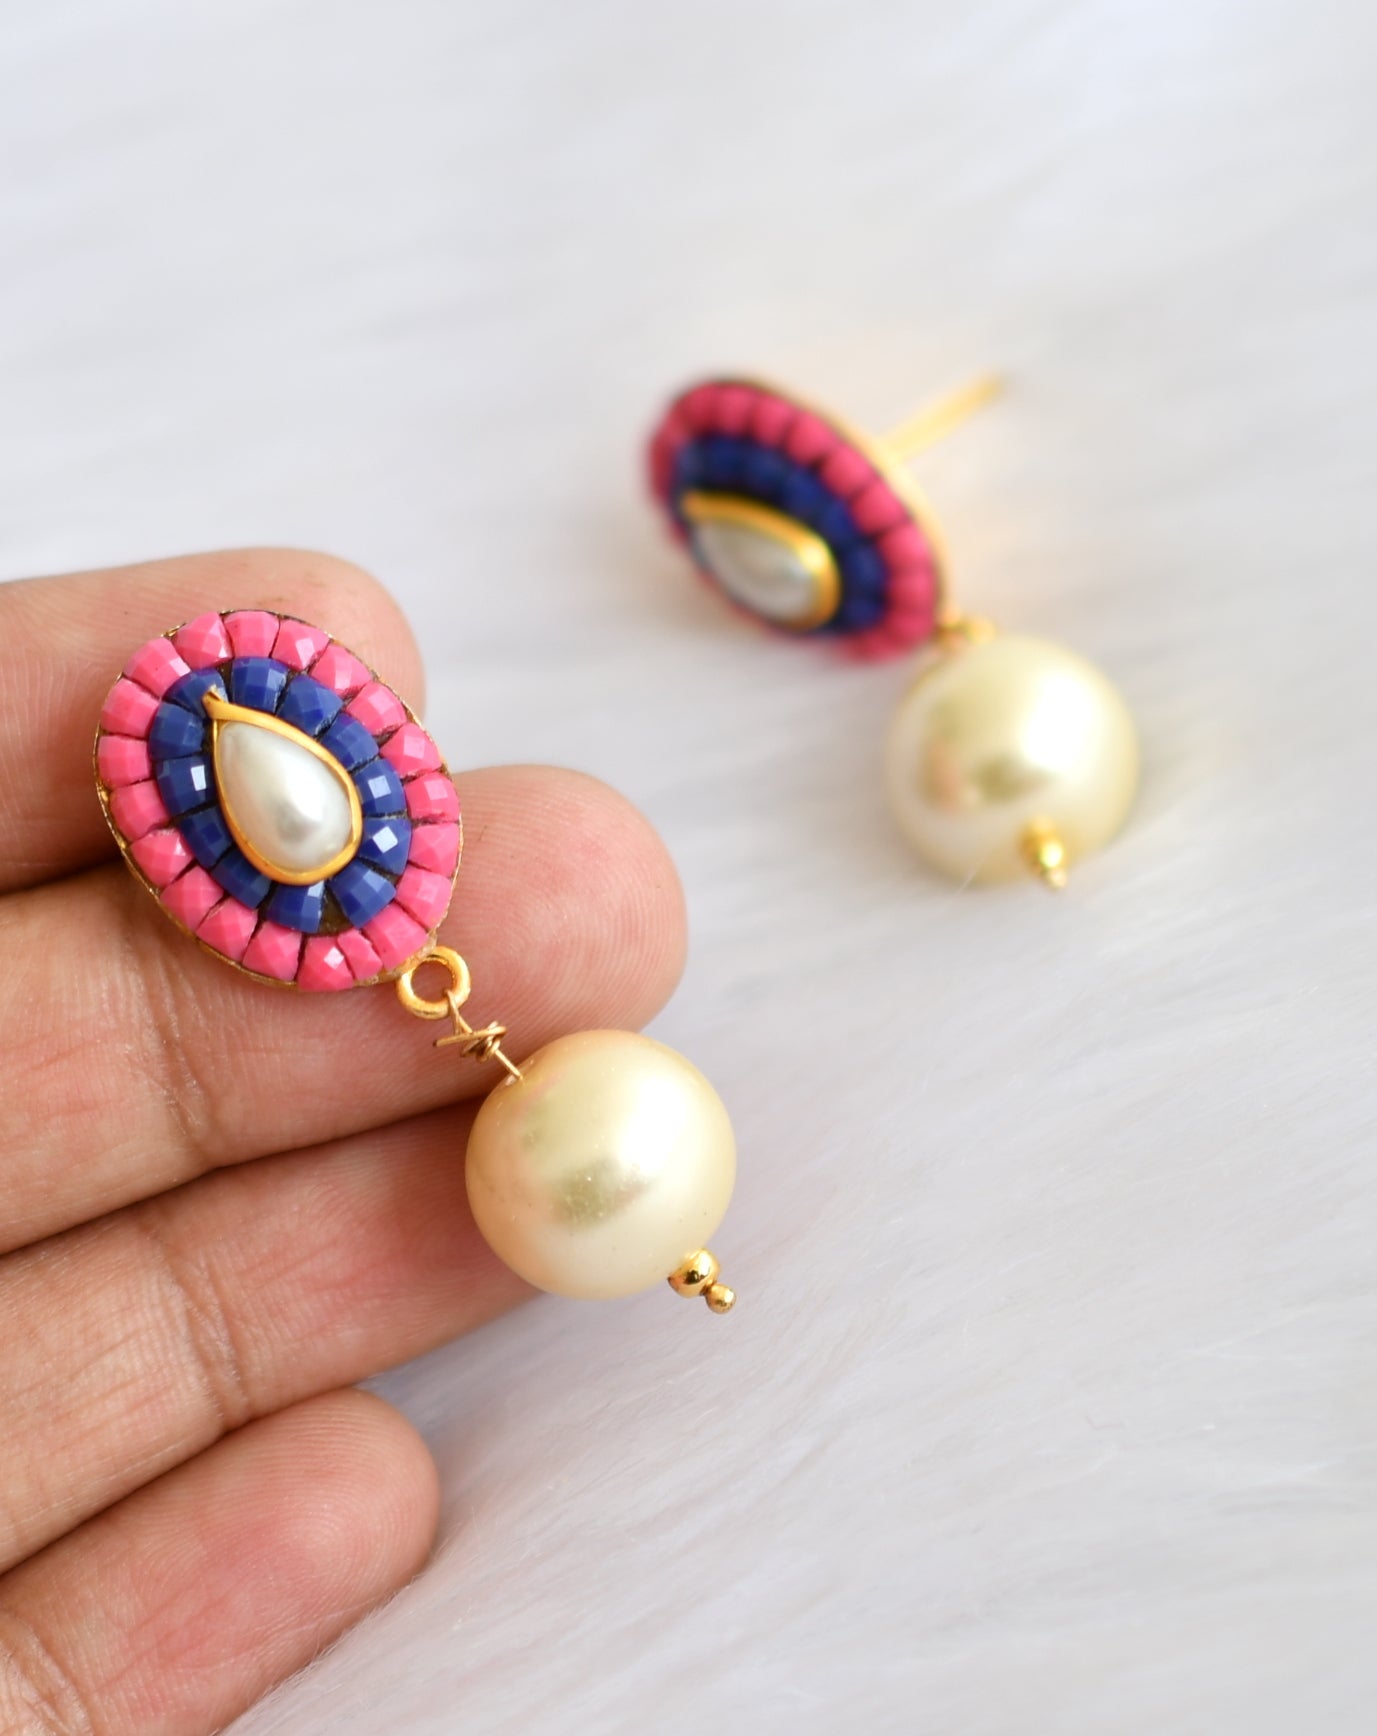 Handmade multi color pachi pendant necklace set dj-02357